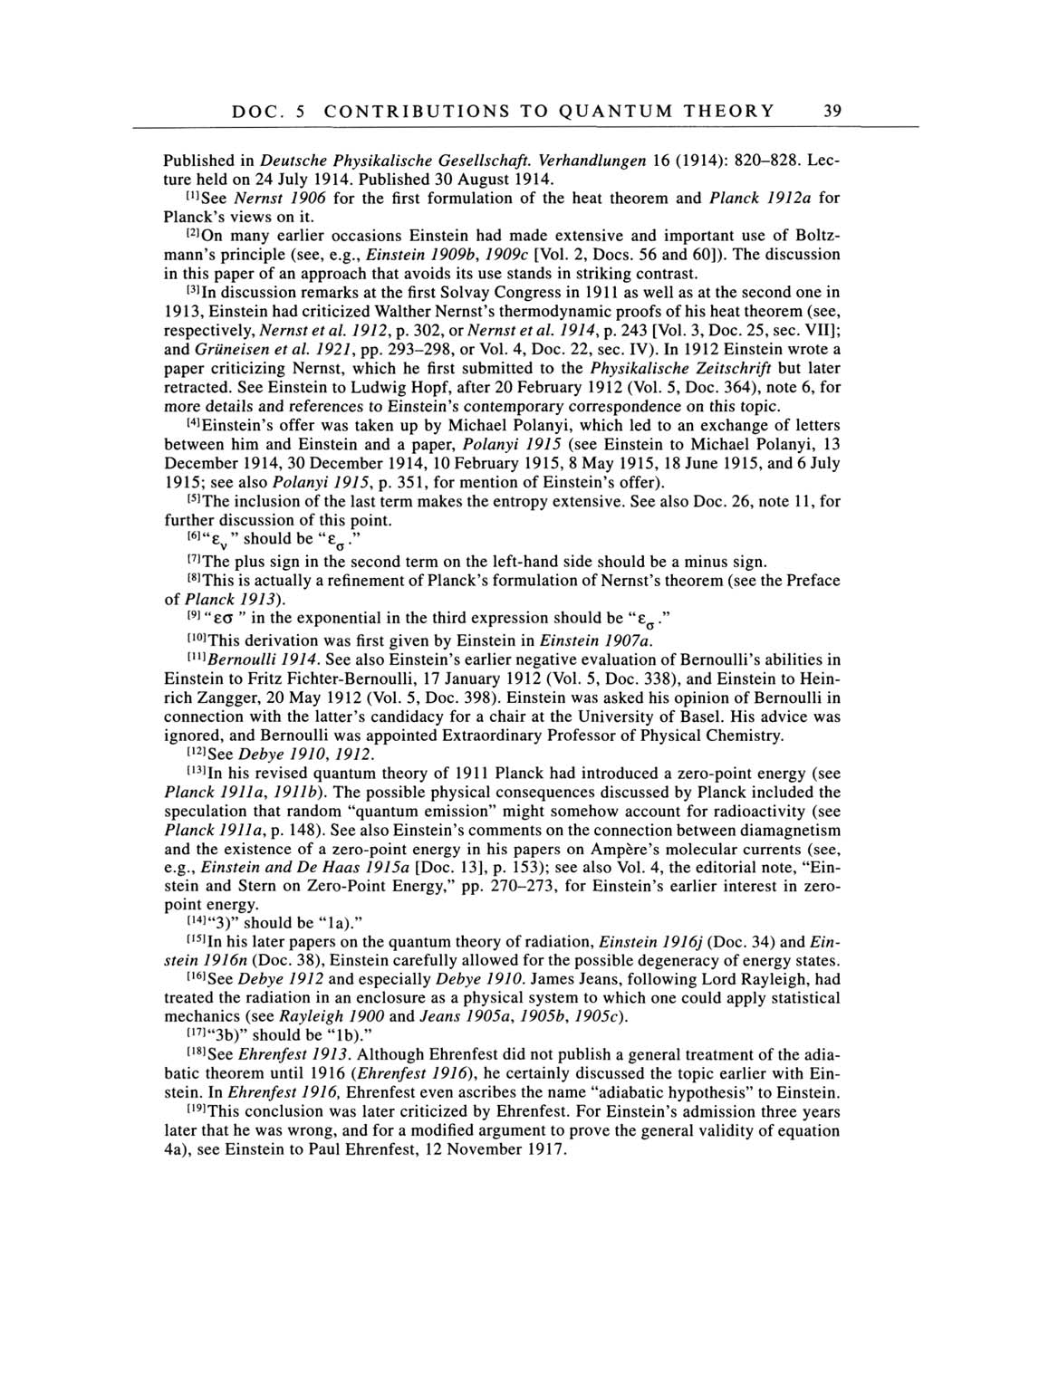 Volume 6: The Berlin Years: Writings, 1914-1917 page 39